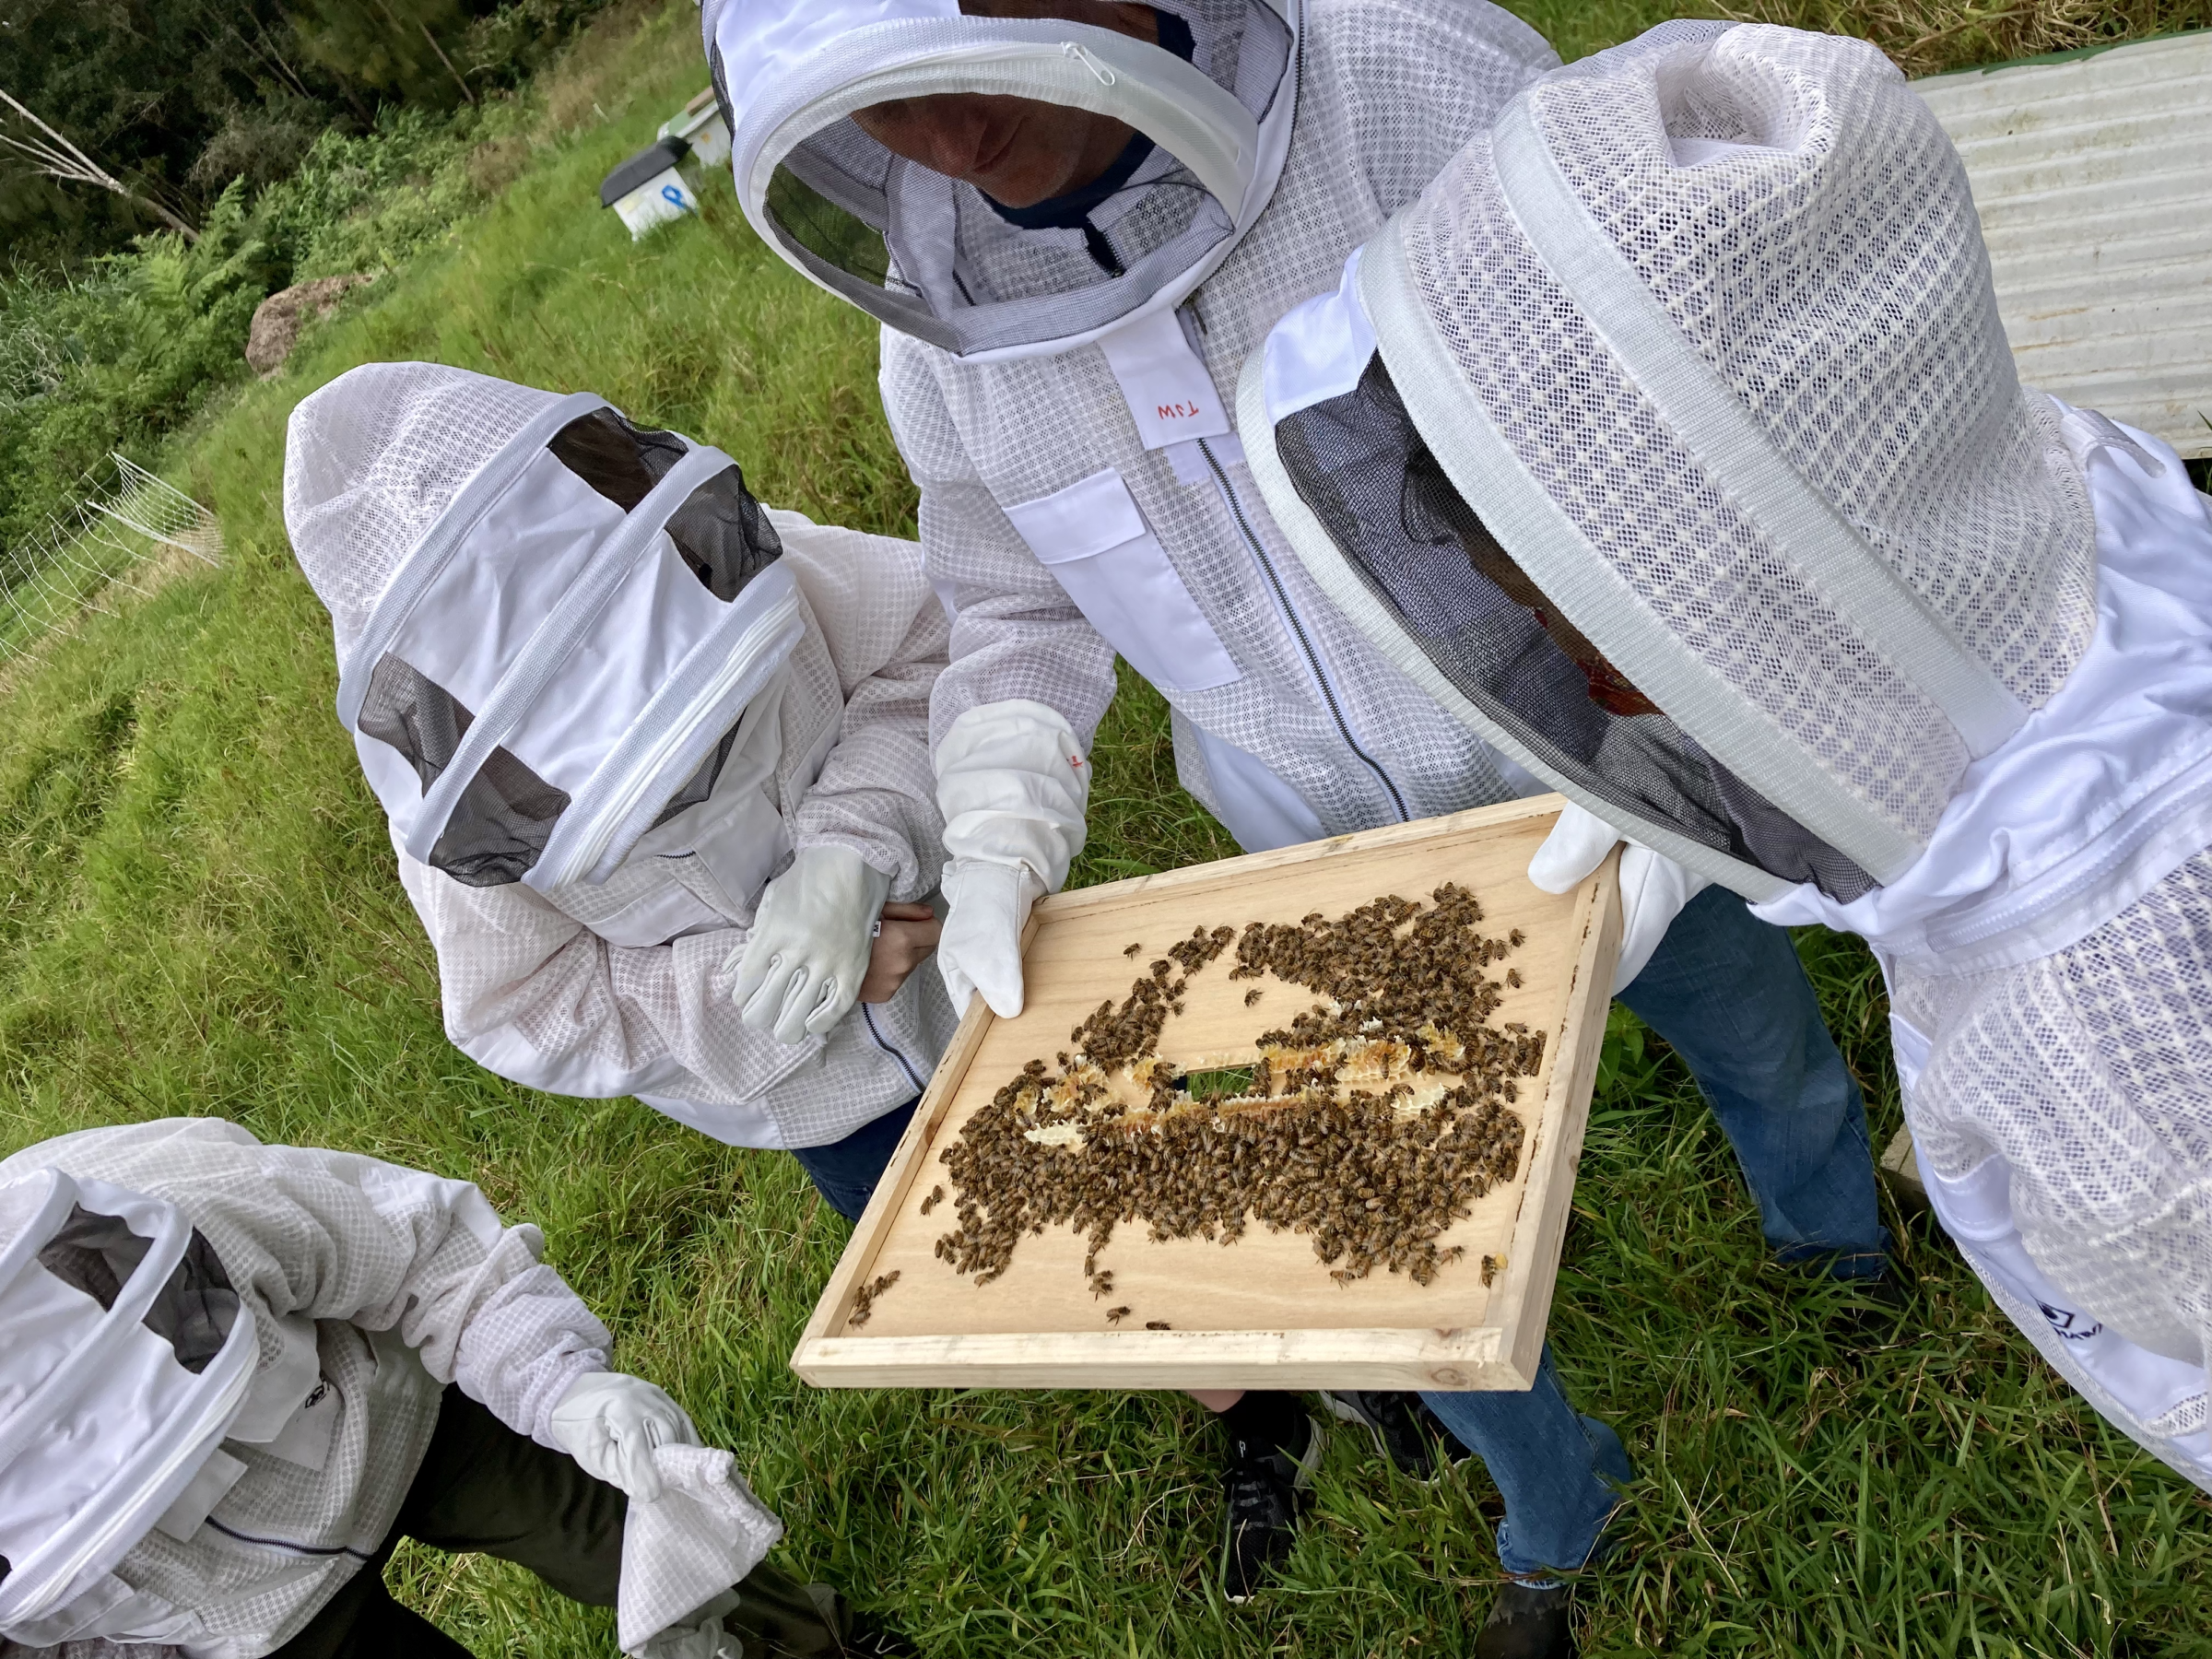 III. Finding the Right Beekeeping Workshop